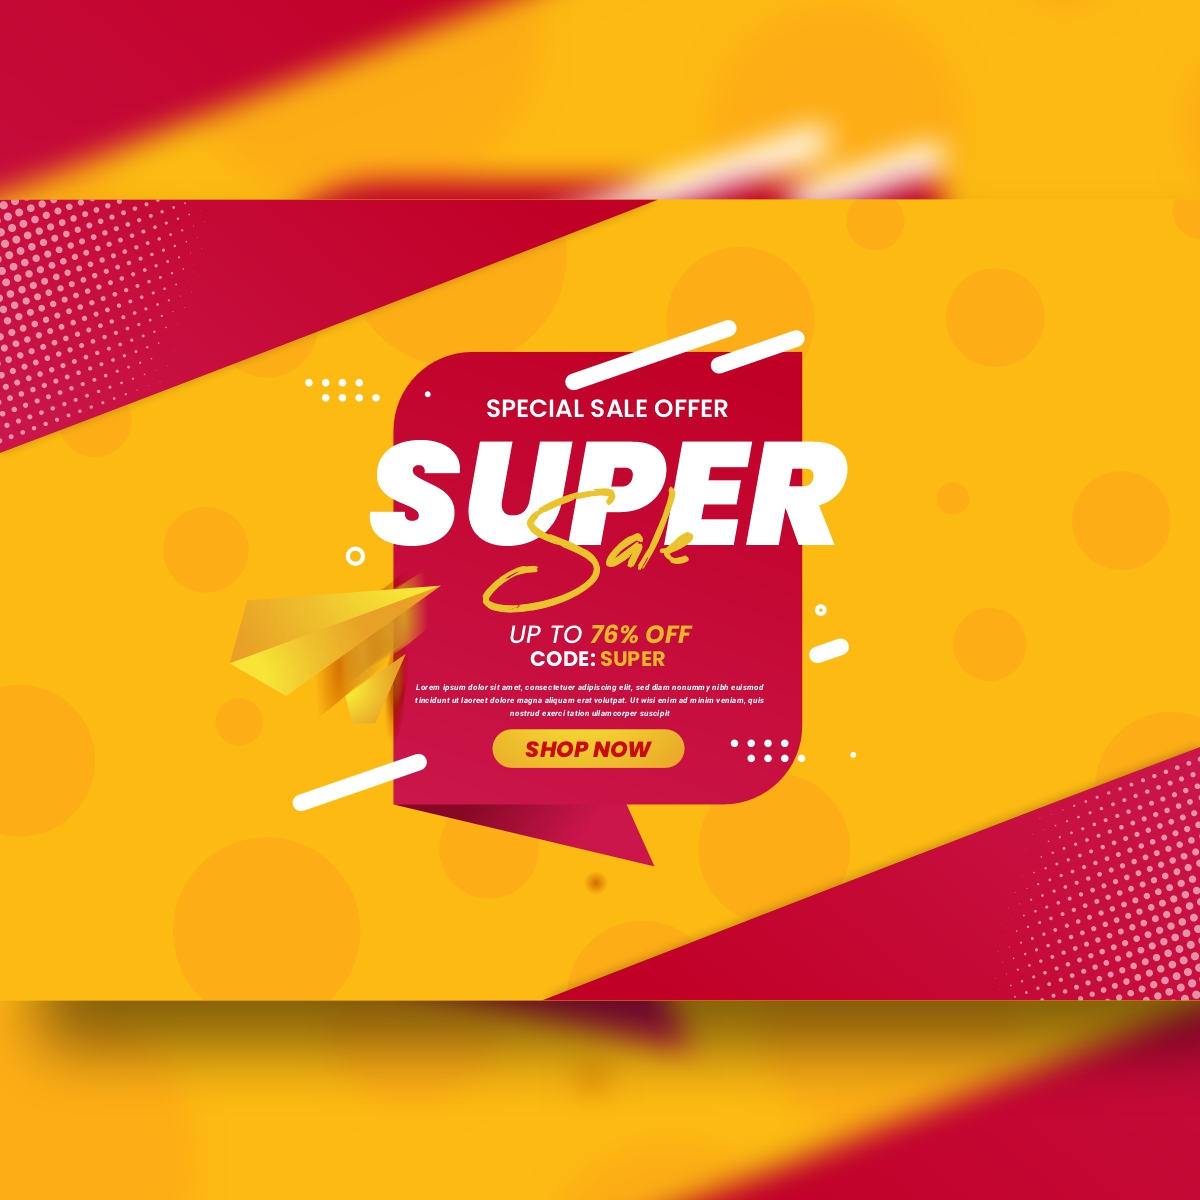 Super Sale Download Free Banner From CorelDraw Design